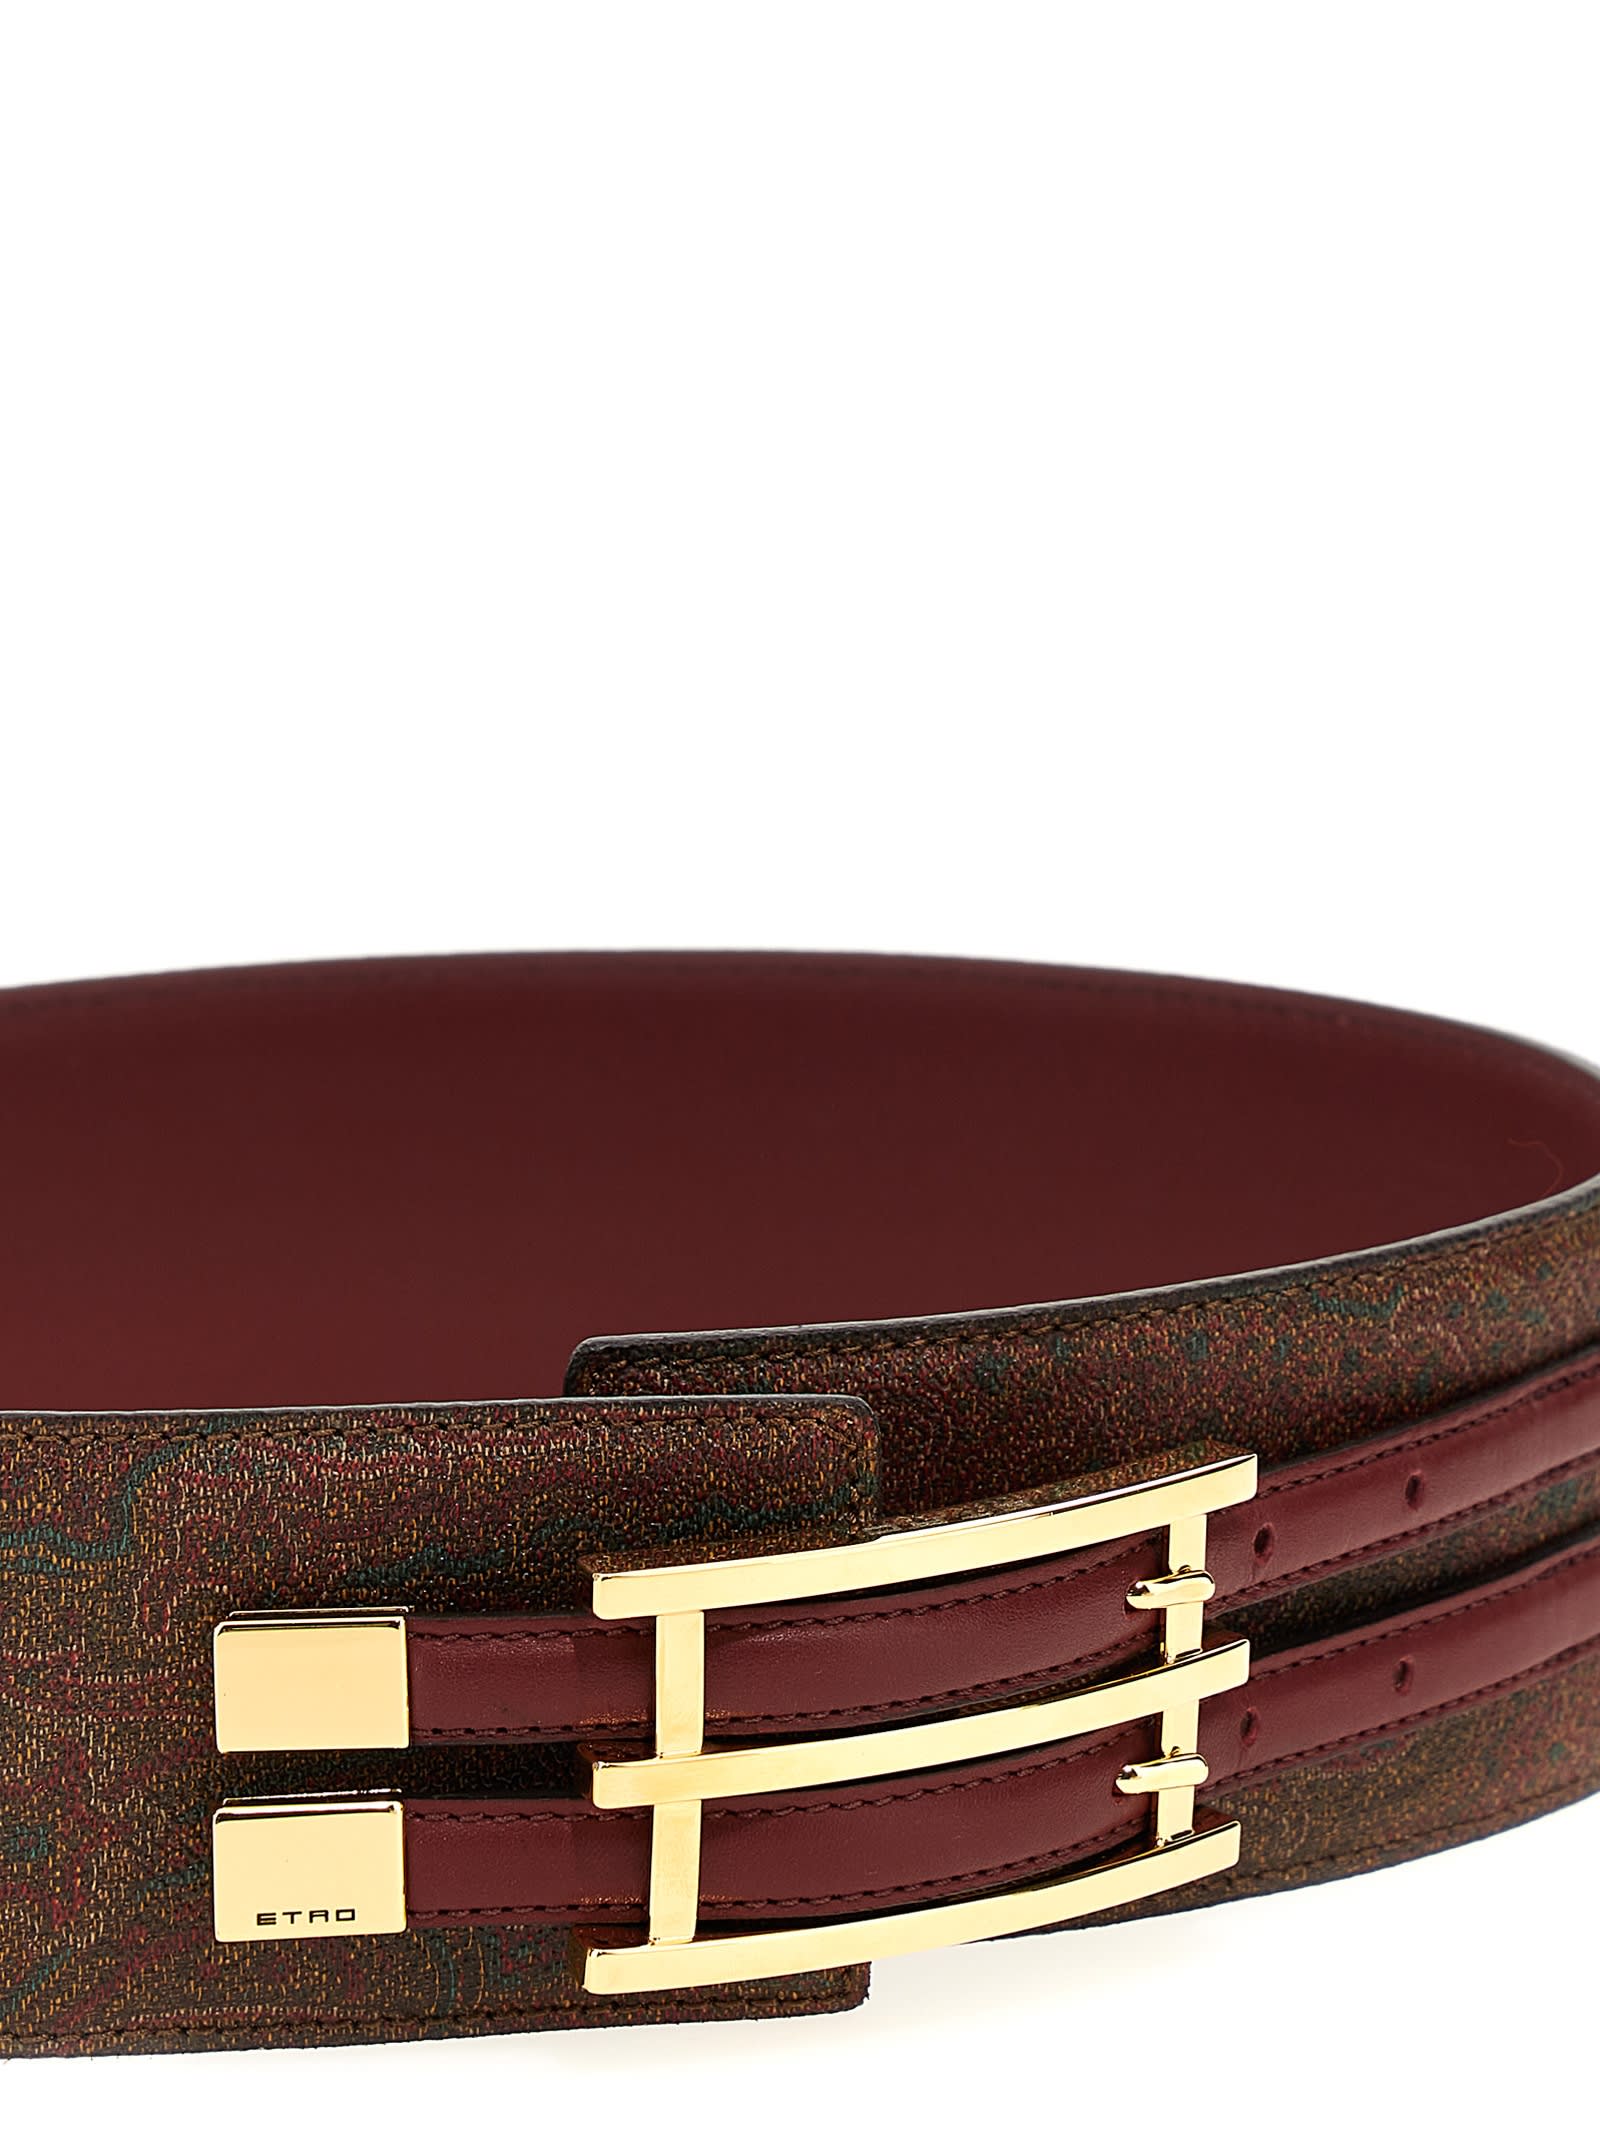 ETRO paisley-print leather belt - Red